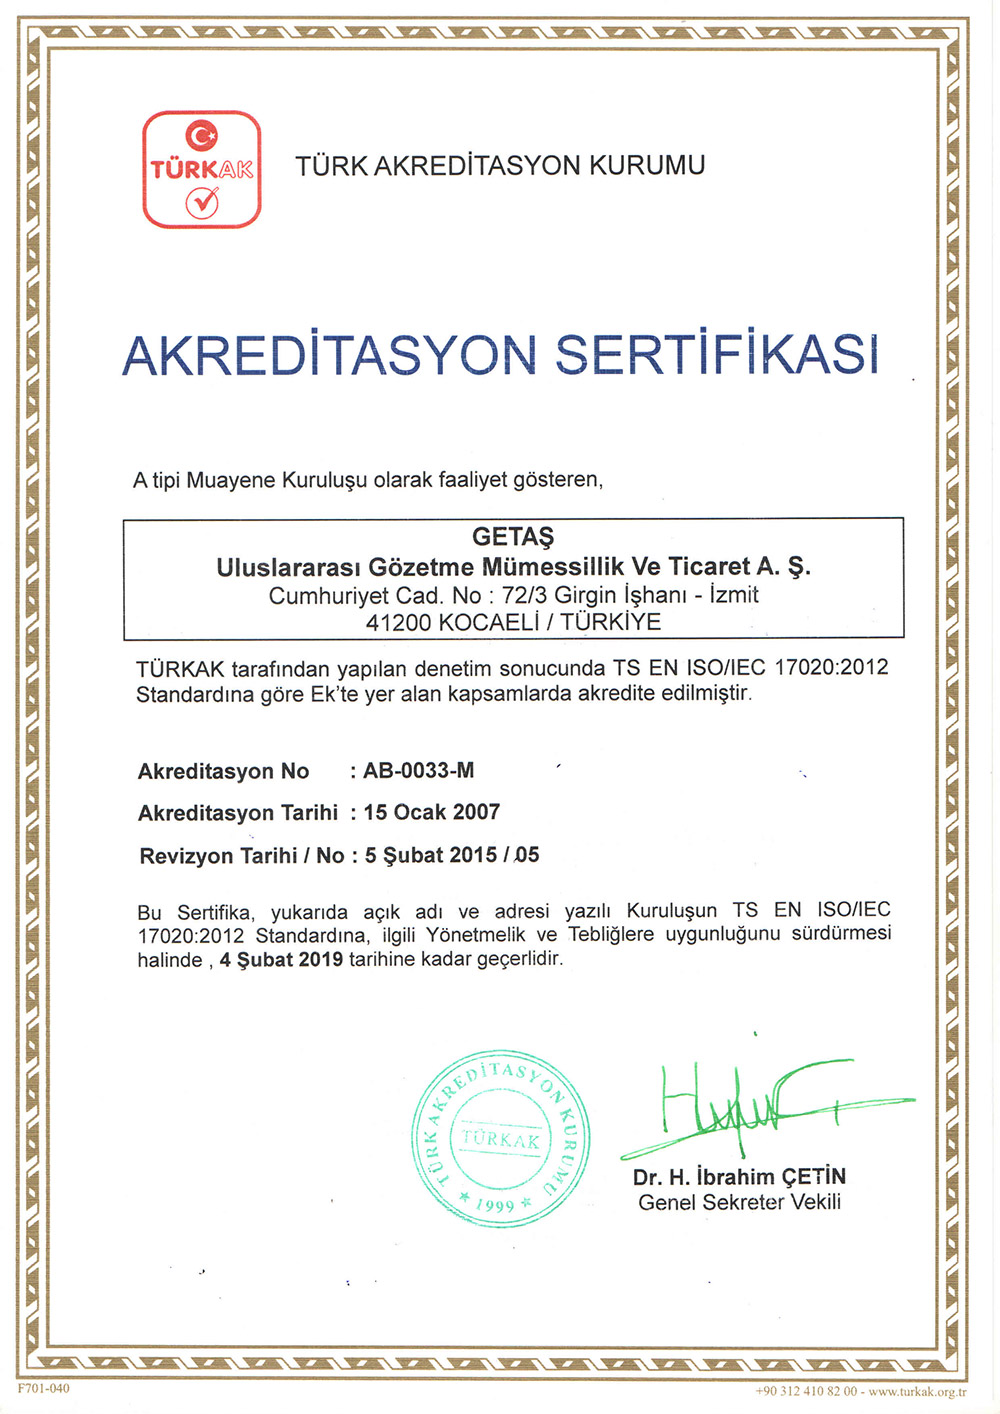 Certificate Of Accreditation prntbl concejomunicipaldechinu gov co